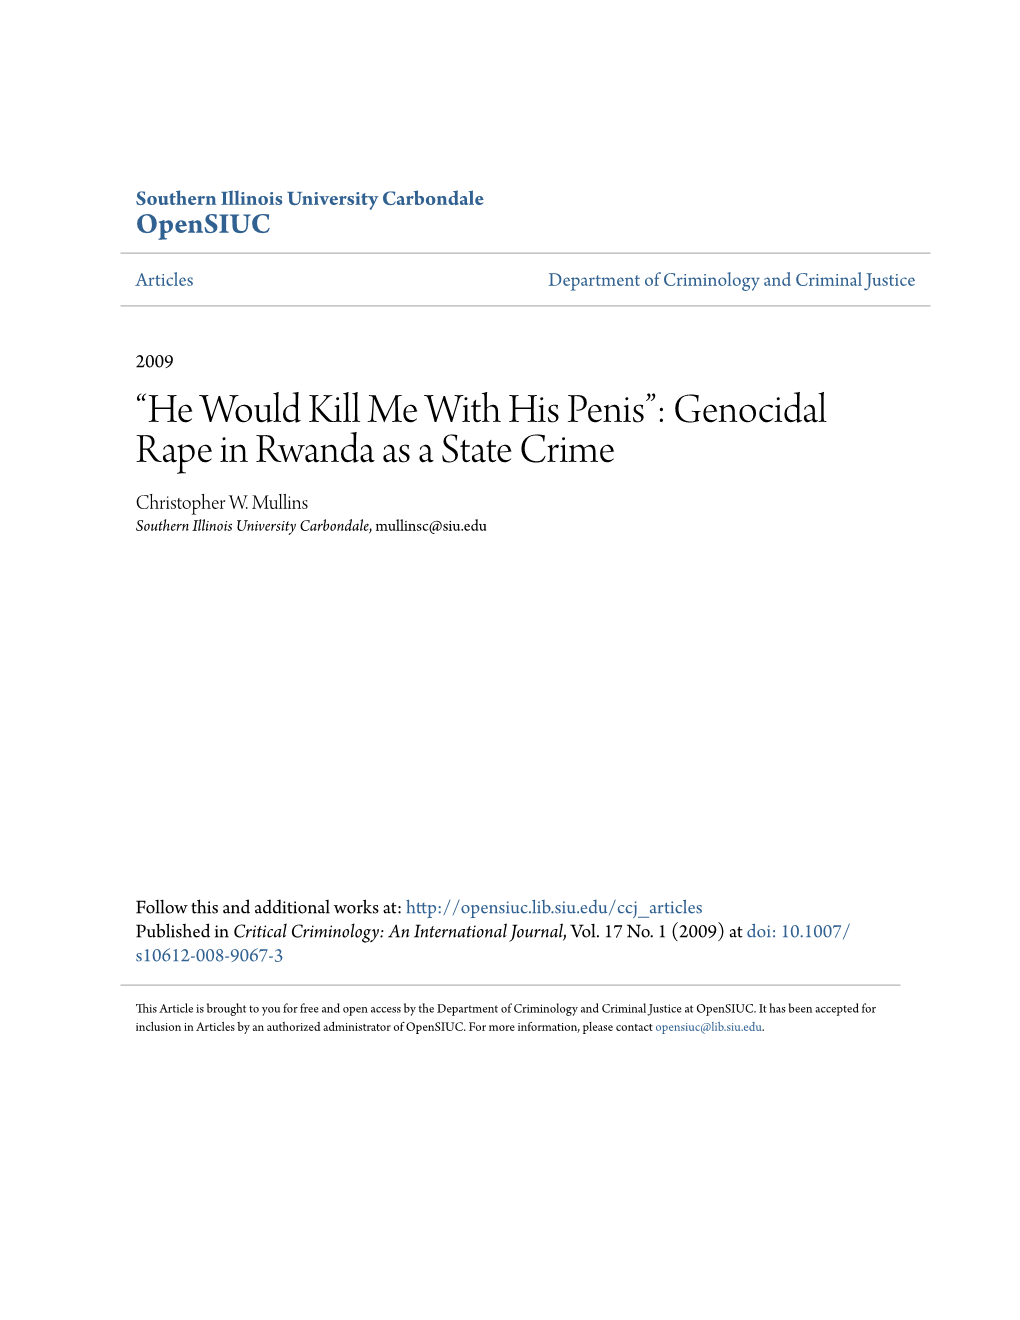 Genocidal Rape in Rwanda As a State Crime Christopher W